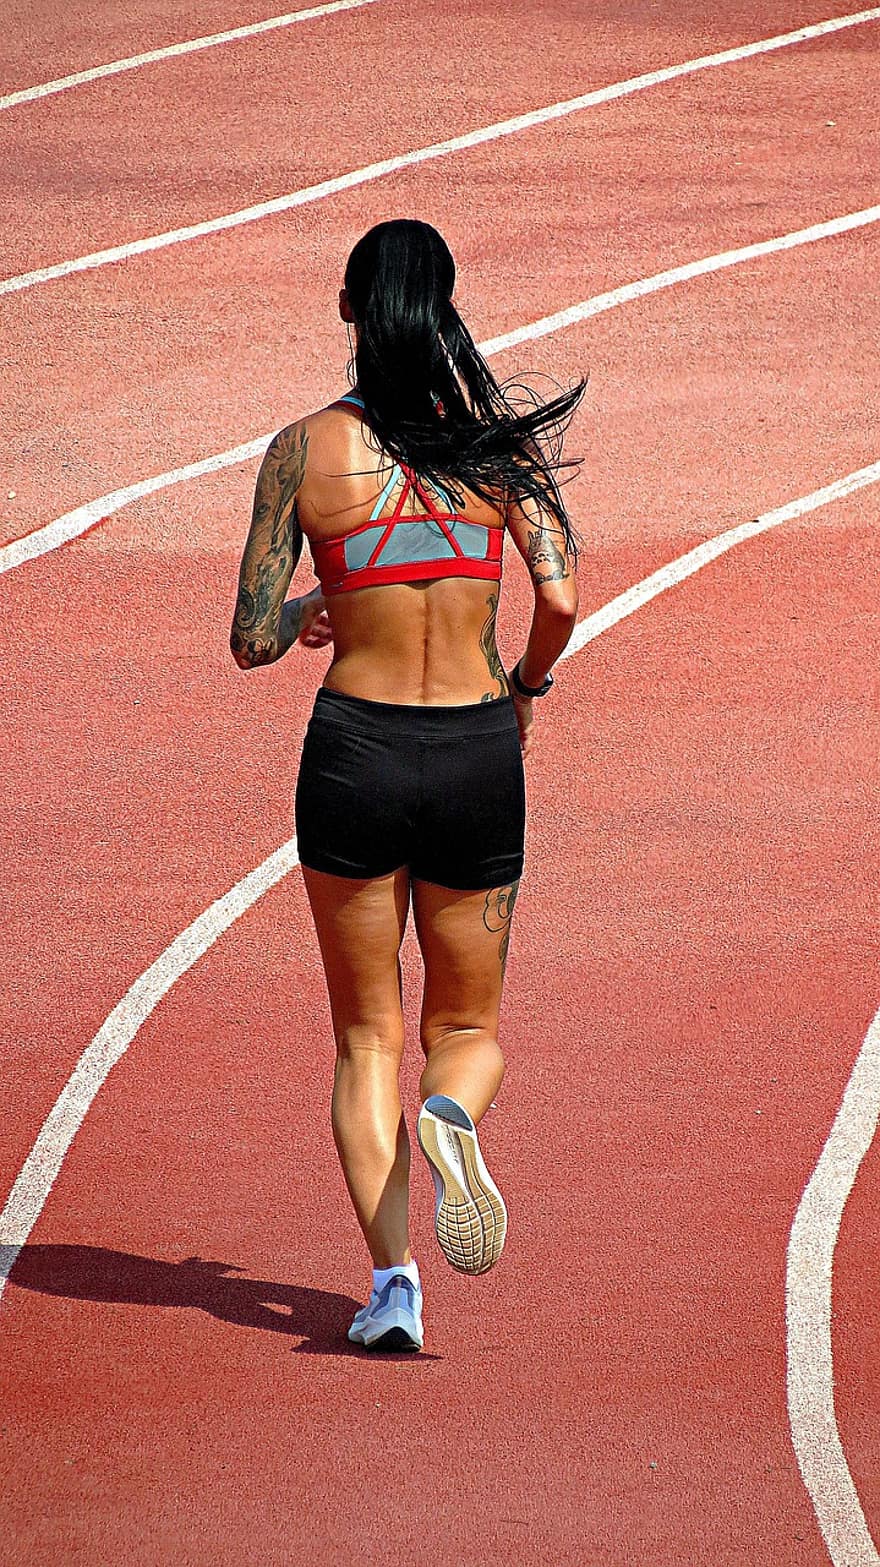 Run, Fitness, Running Track, Woman, Sports, Wellness, Exercise, Workout, Running, Jogging, sport